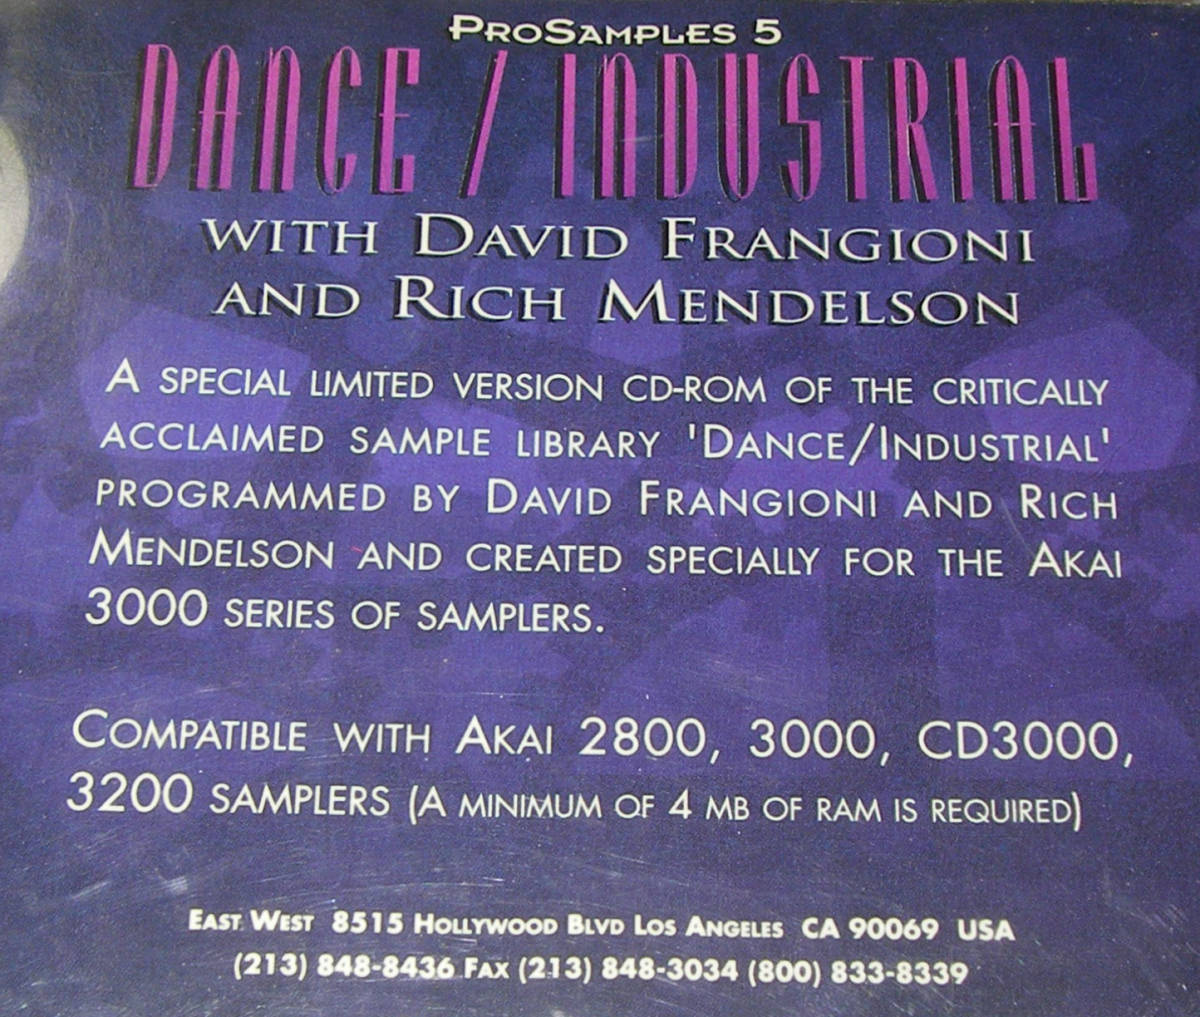 *EAST WEST AKAI CD3000 DANCE/INDUSTRIAL SOUND SAMPLER Sound Library*